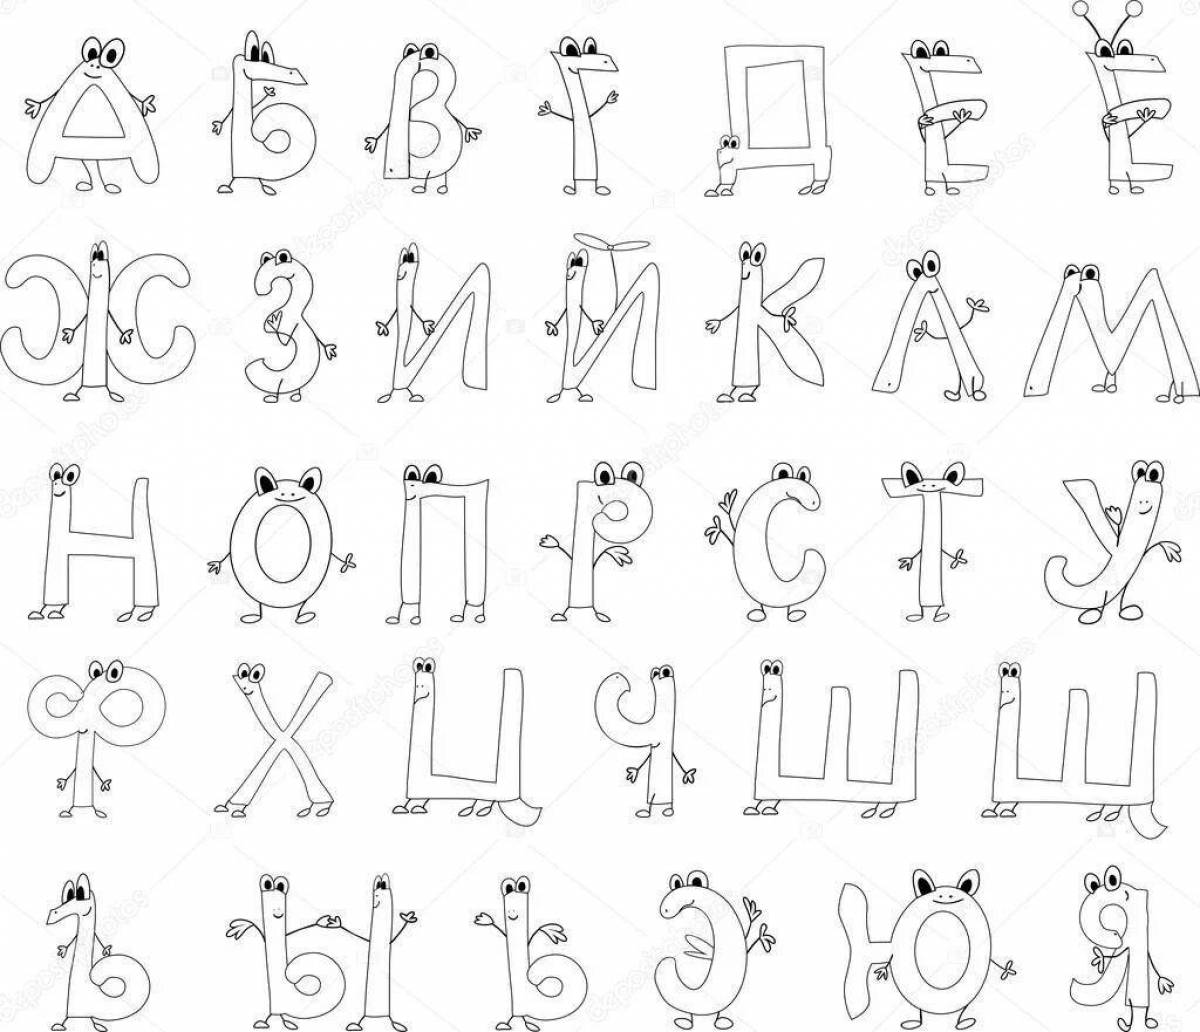 Russian alphabet #1